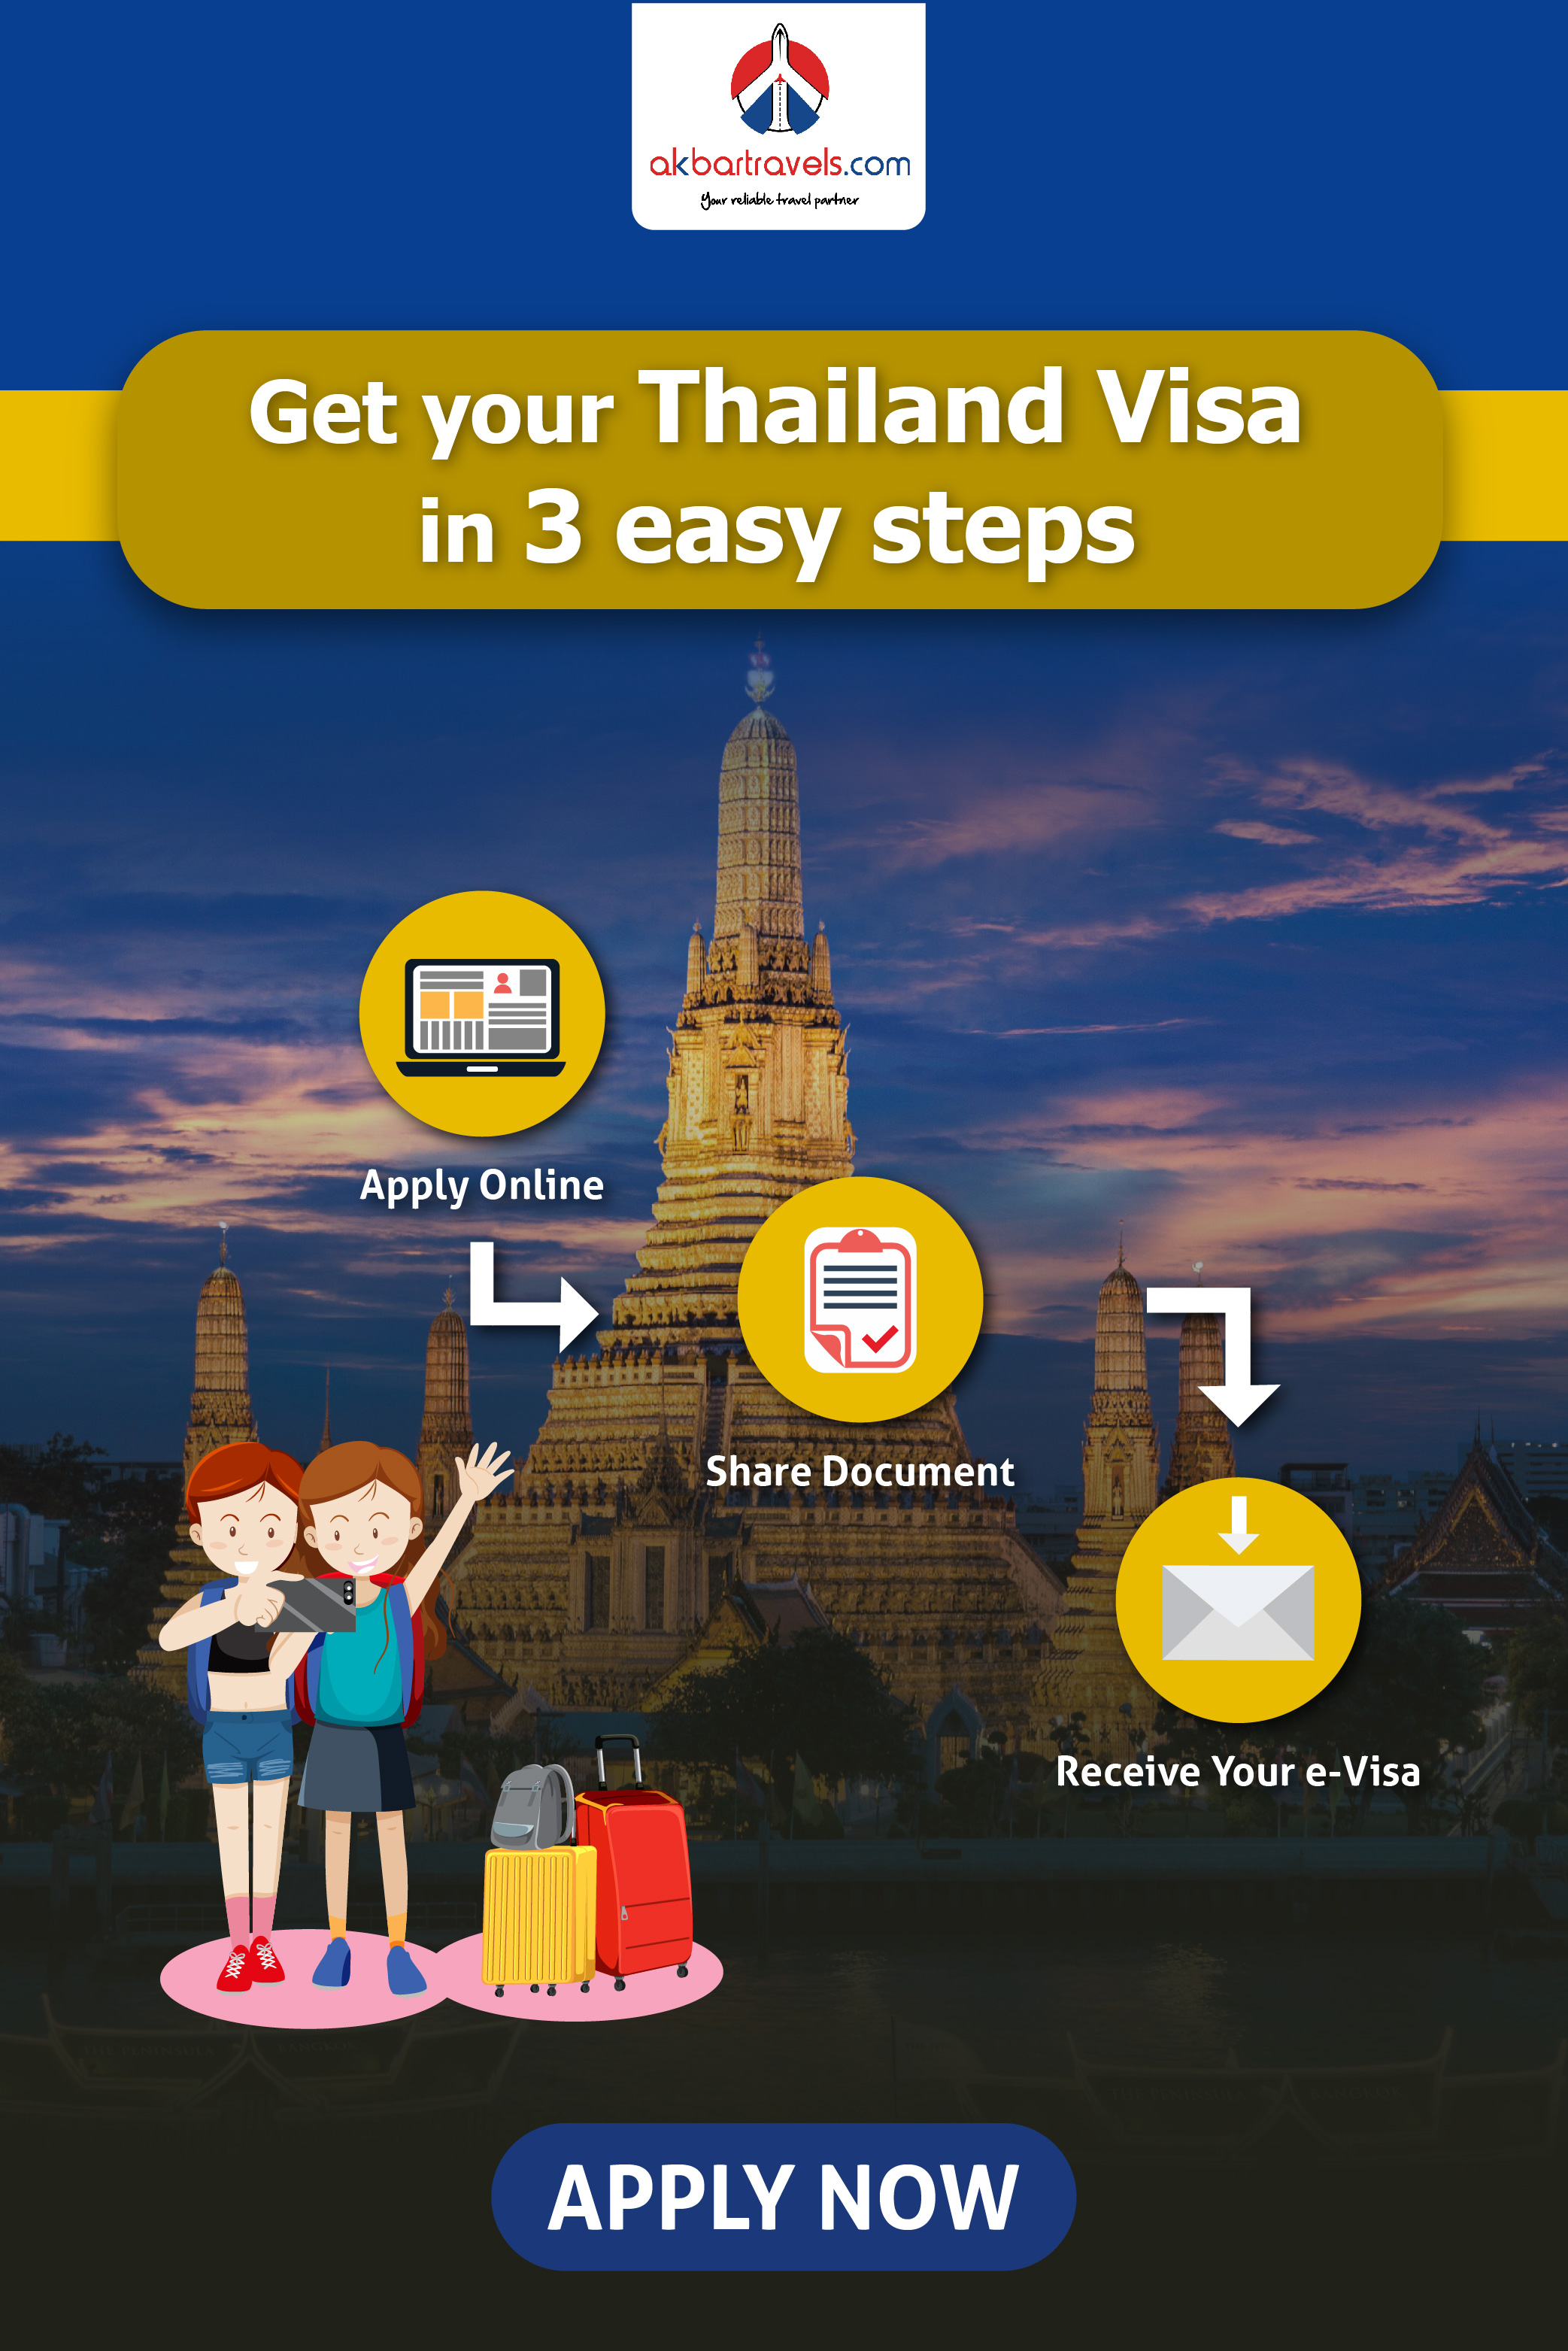 Thailand visa promotion by akbar travels